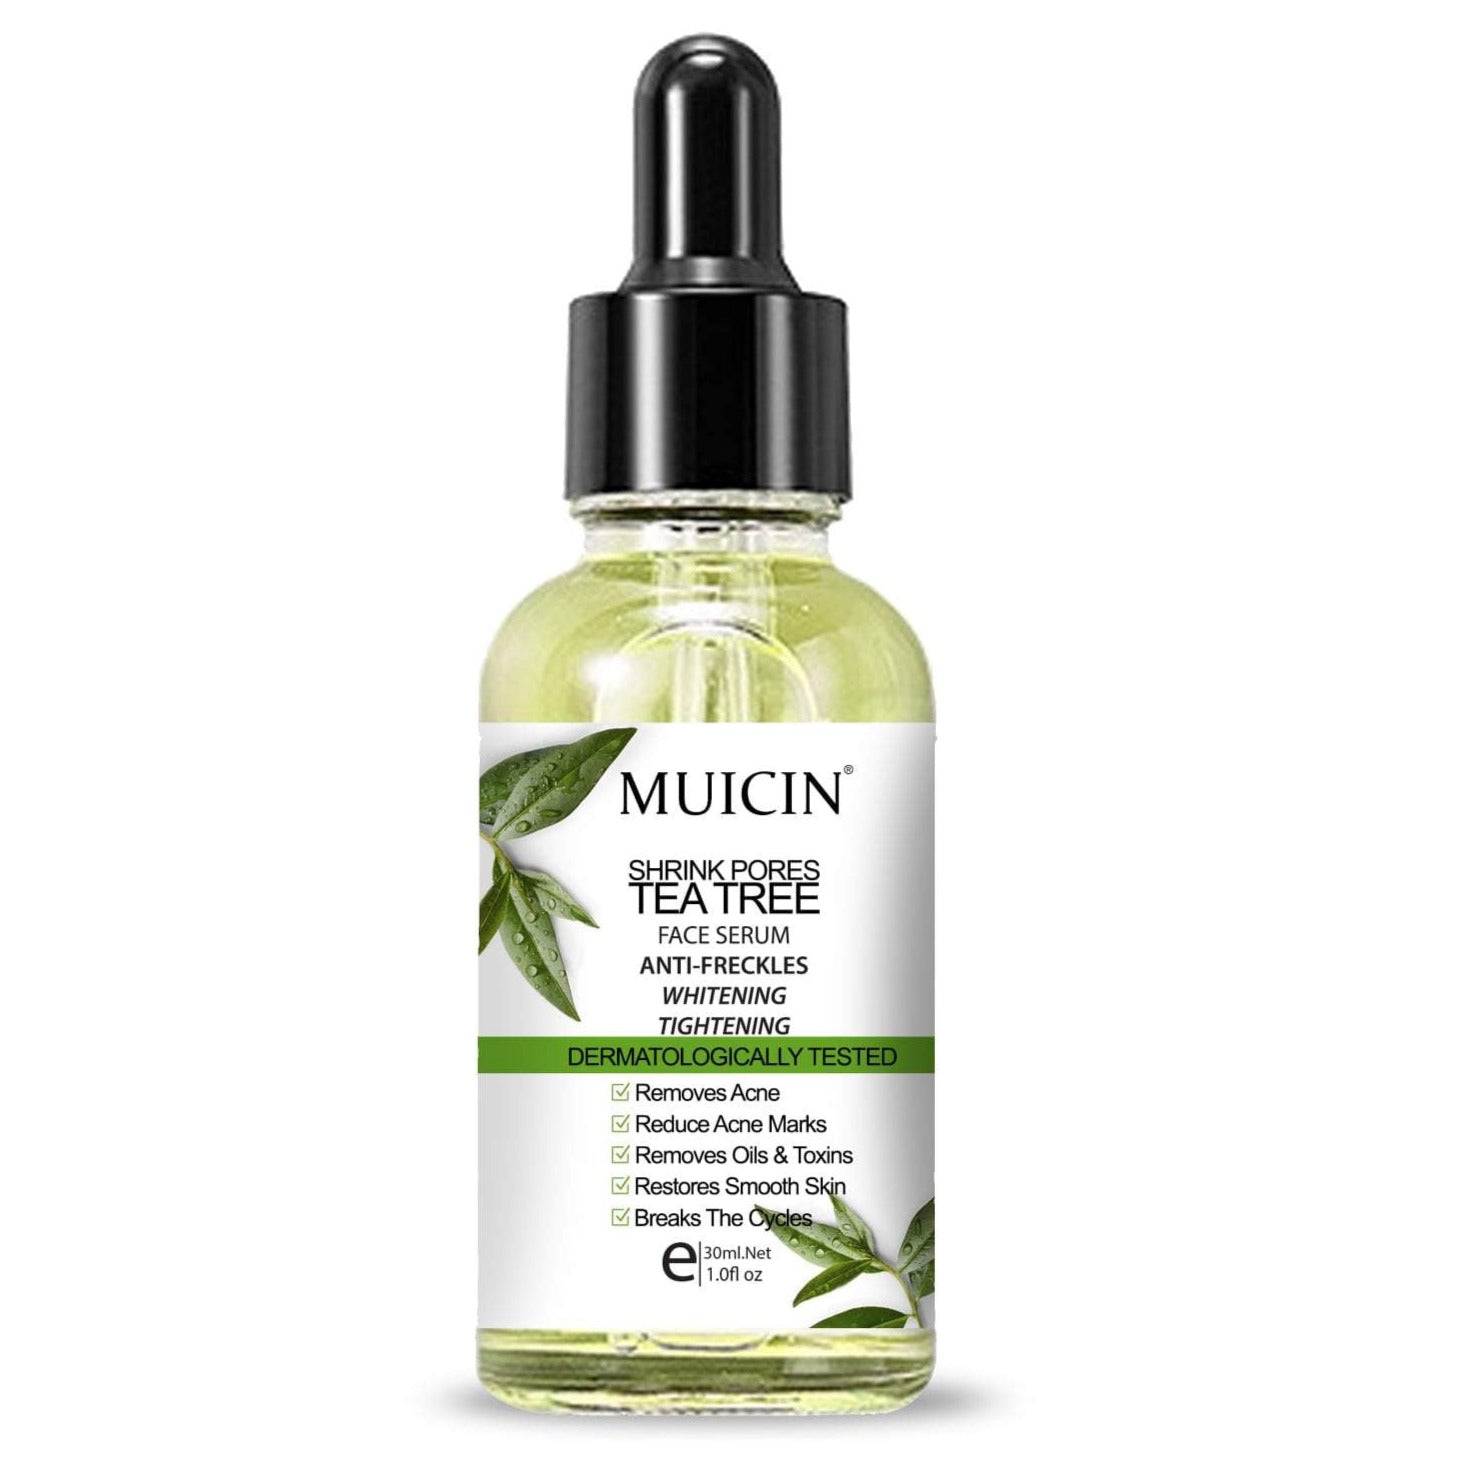 Buy  MUICIN - Shrink Pores Tea Tree Face Serum - 30ml - at Best Price Online in Pakistan